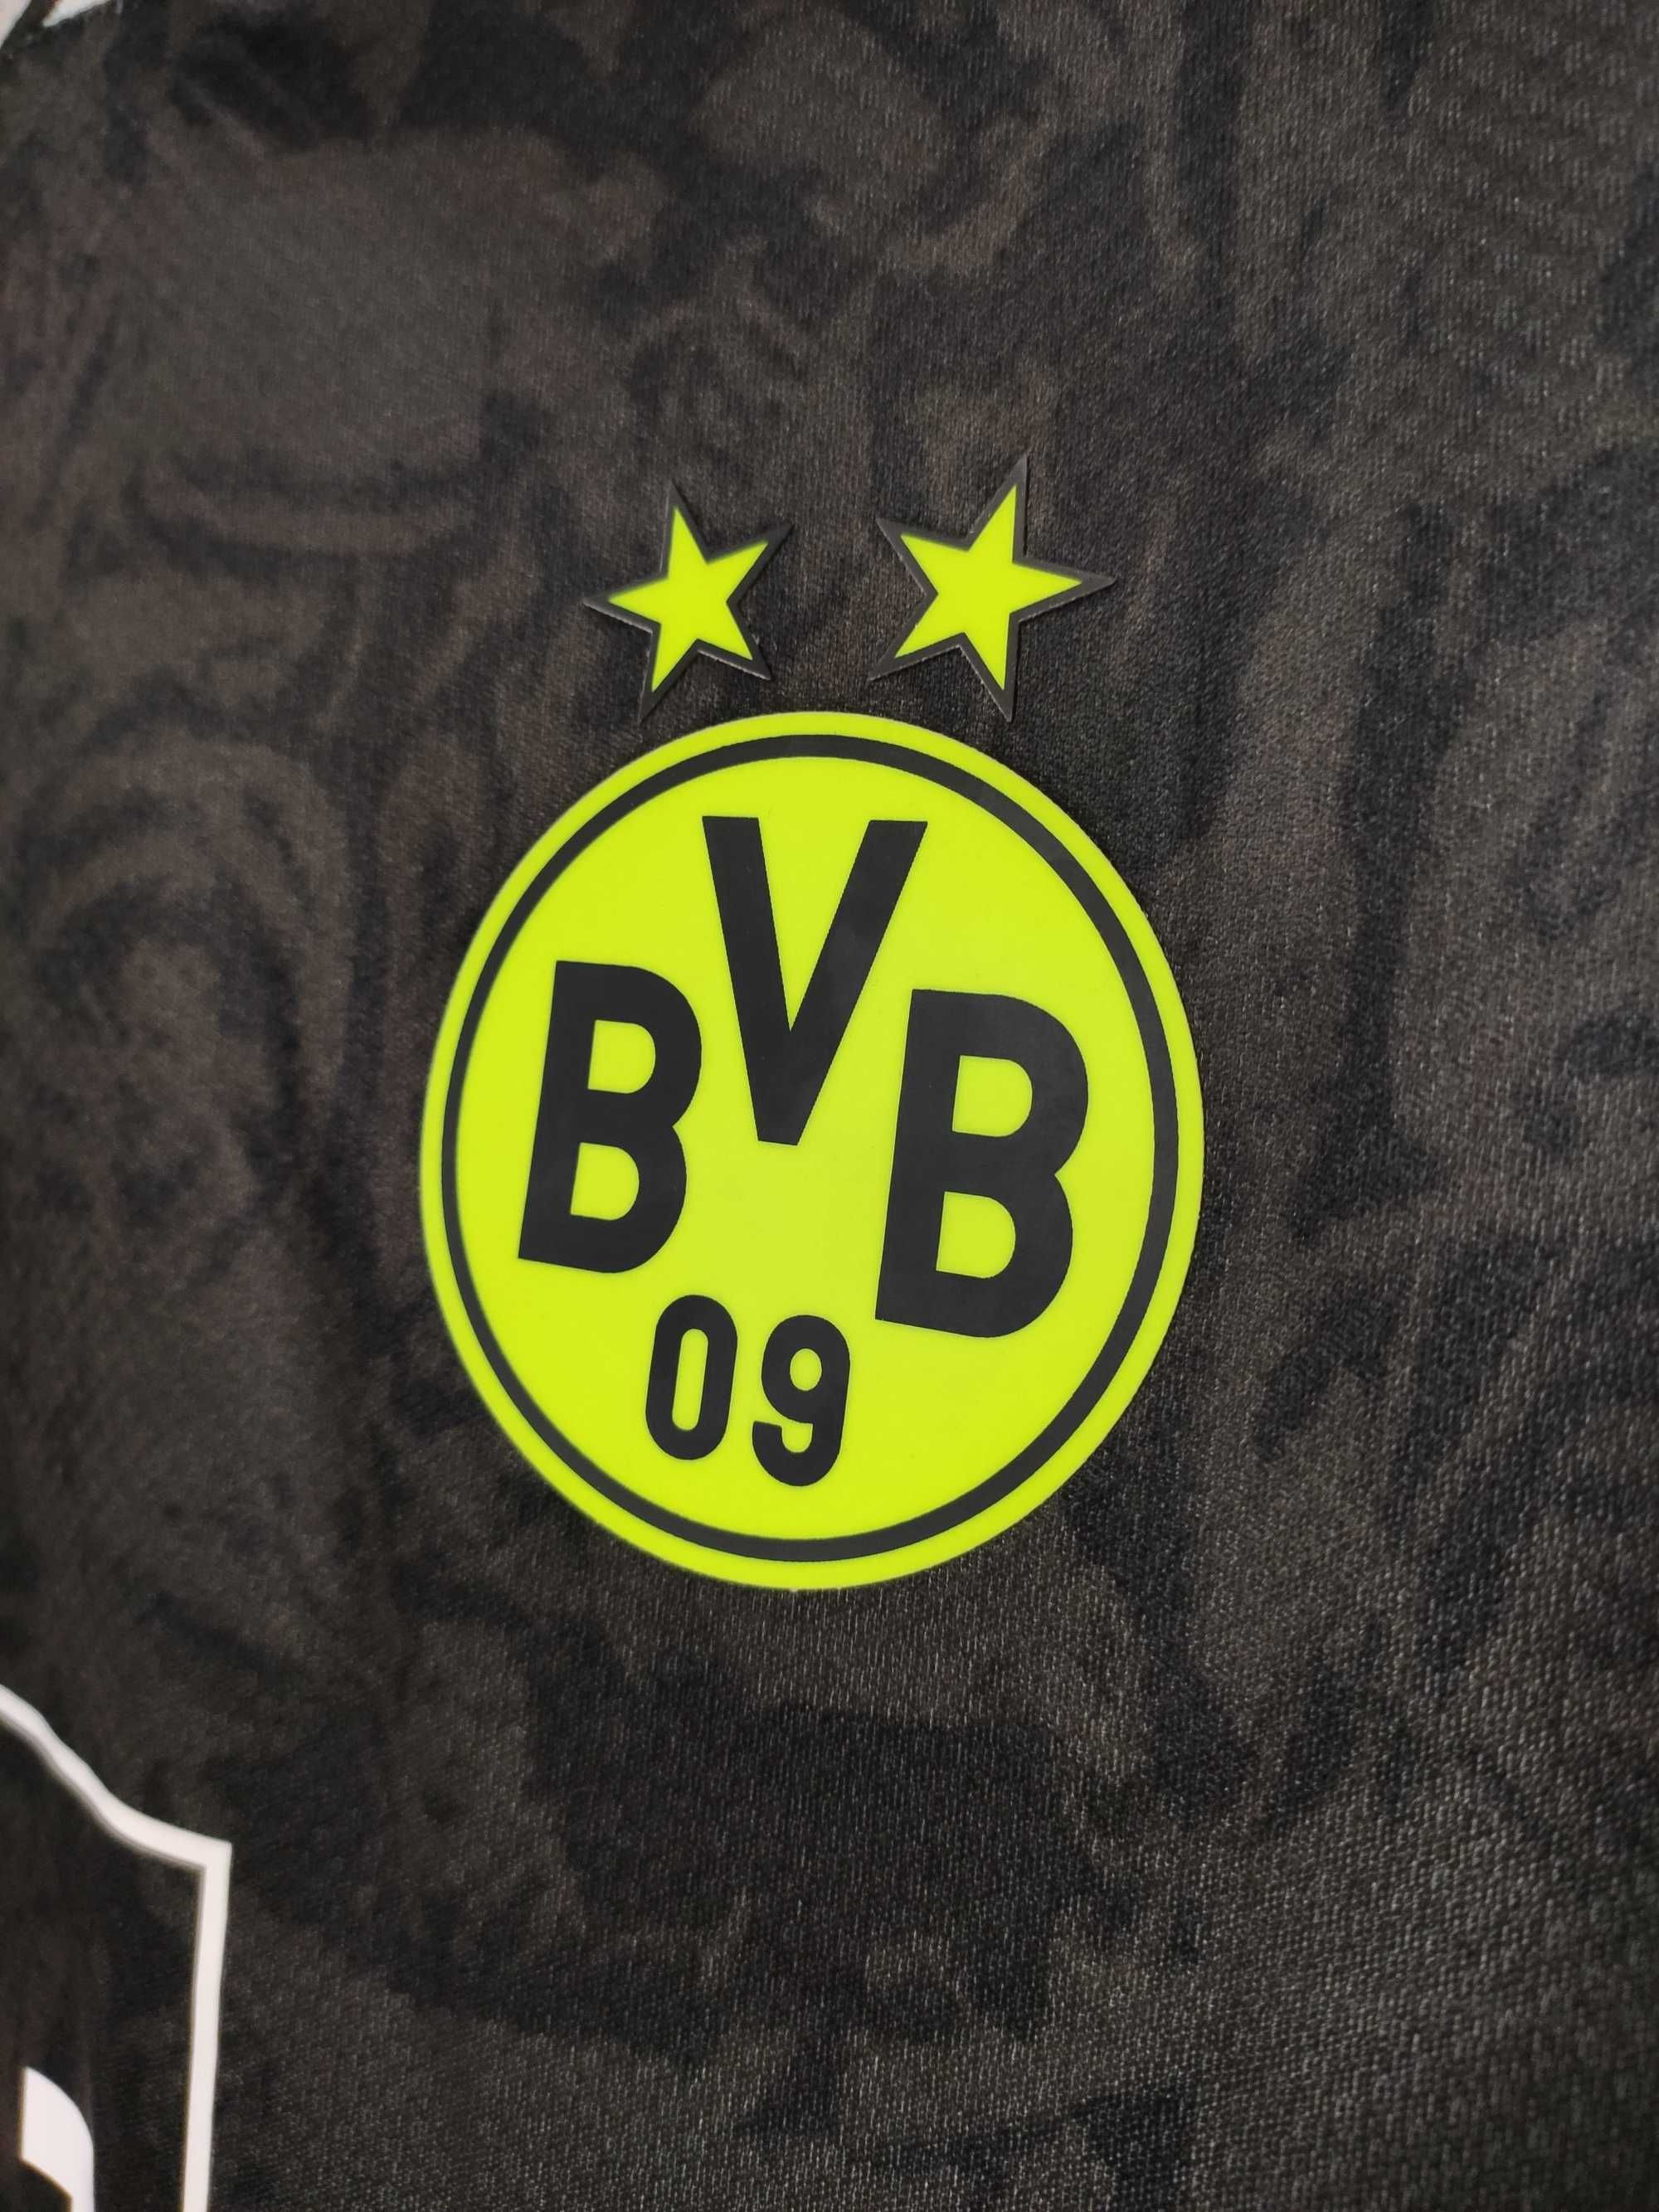 Tricou BELLINGHAM Borussia Dortmund